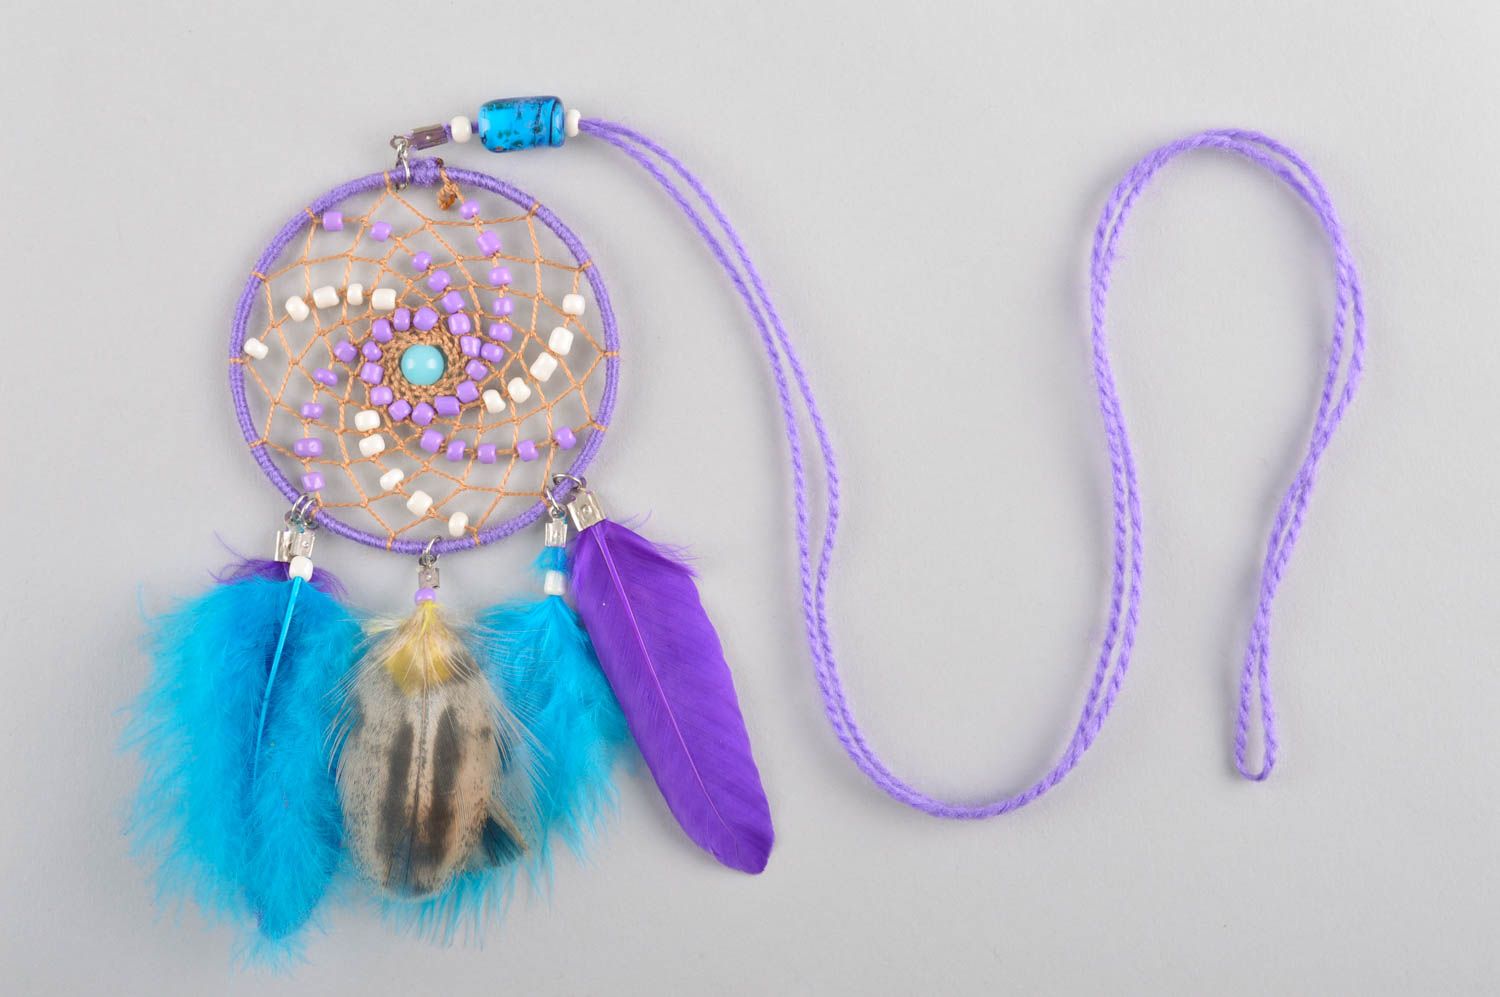 Stylish handmade dreamcatcher necklace wall hanging Indian amulet gift ideas photo 2